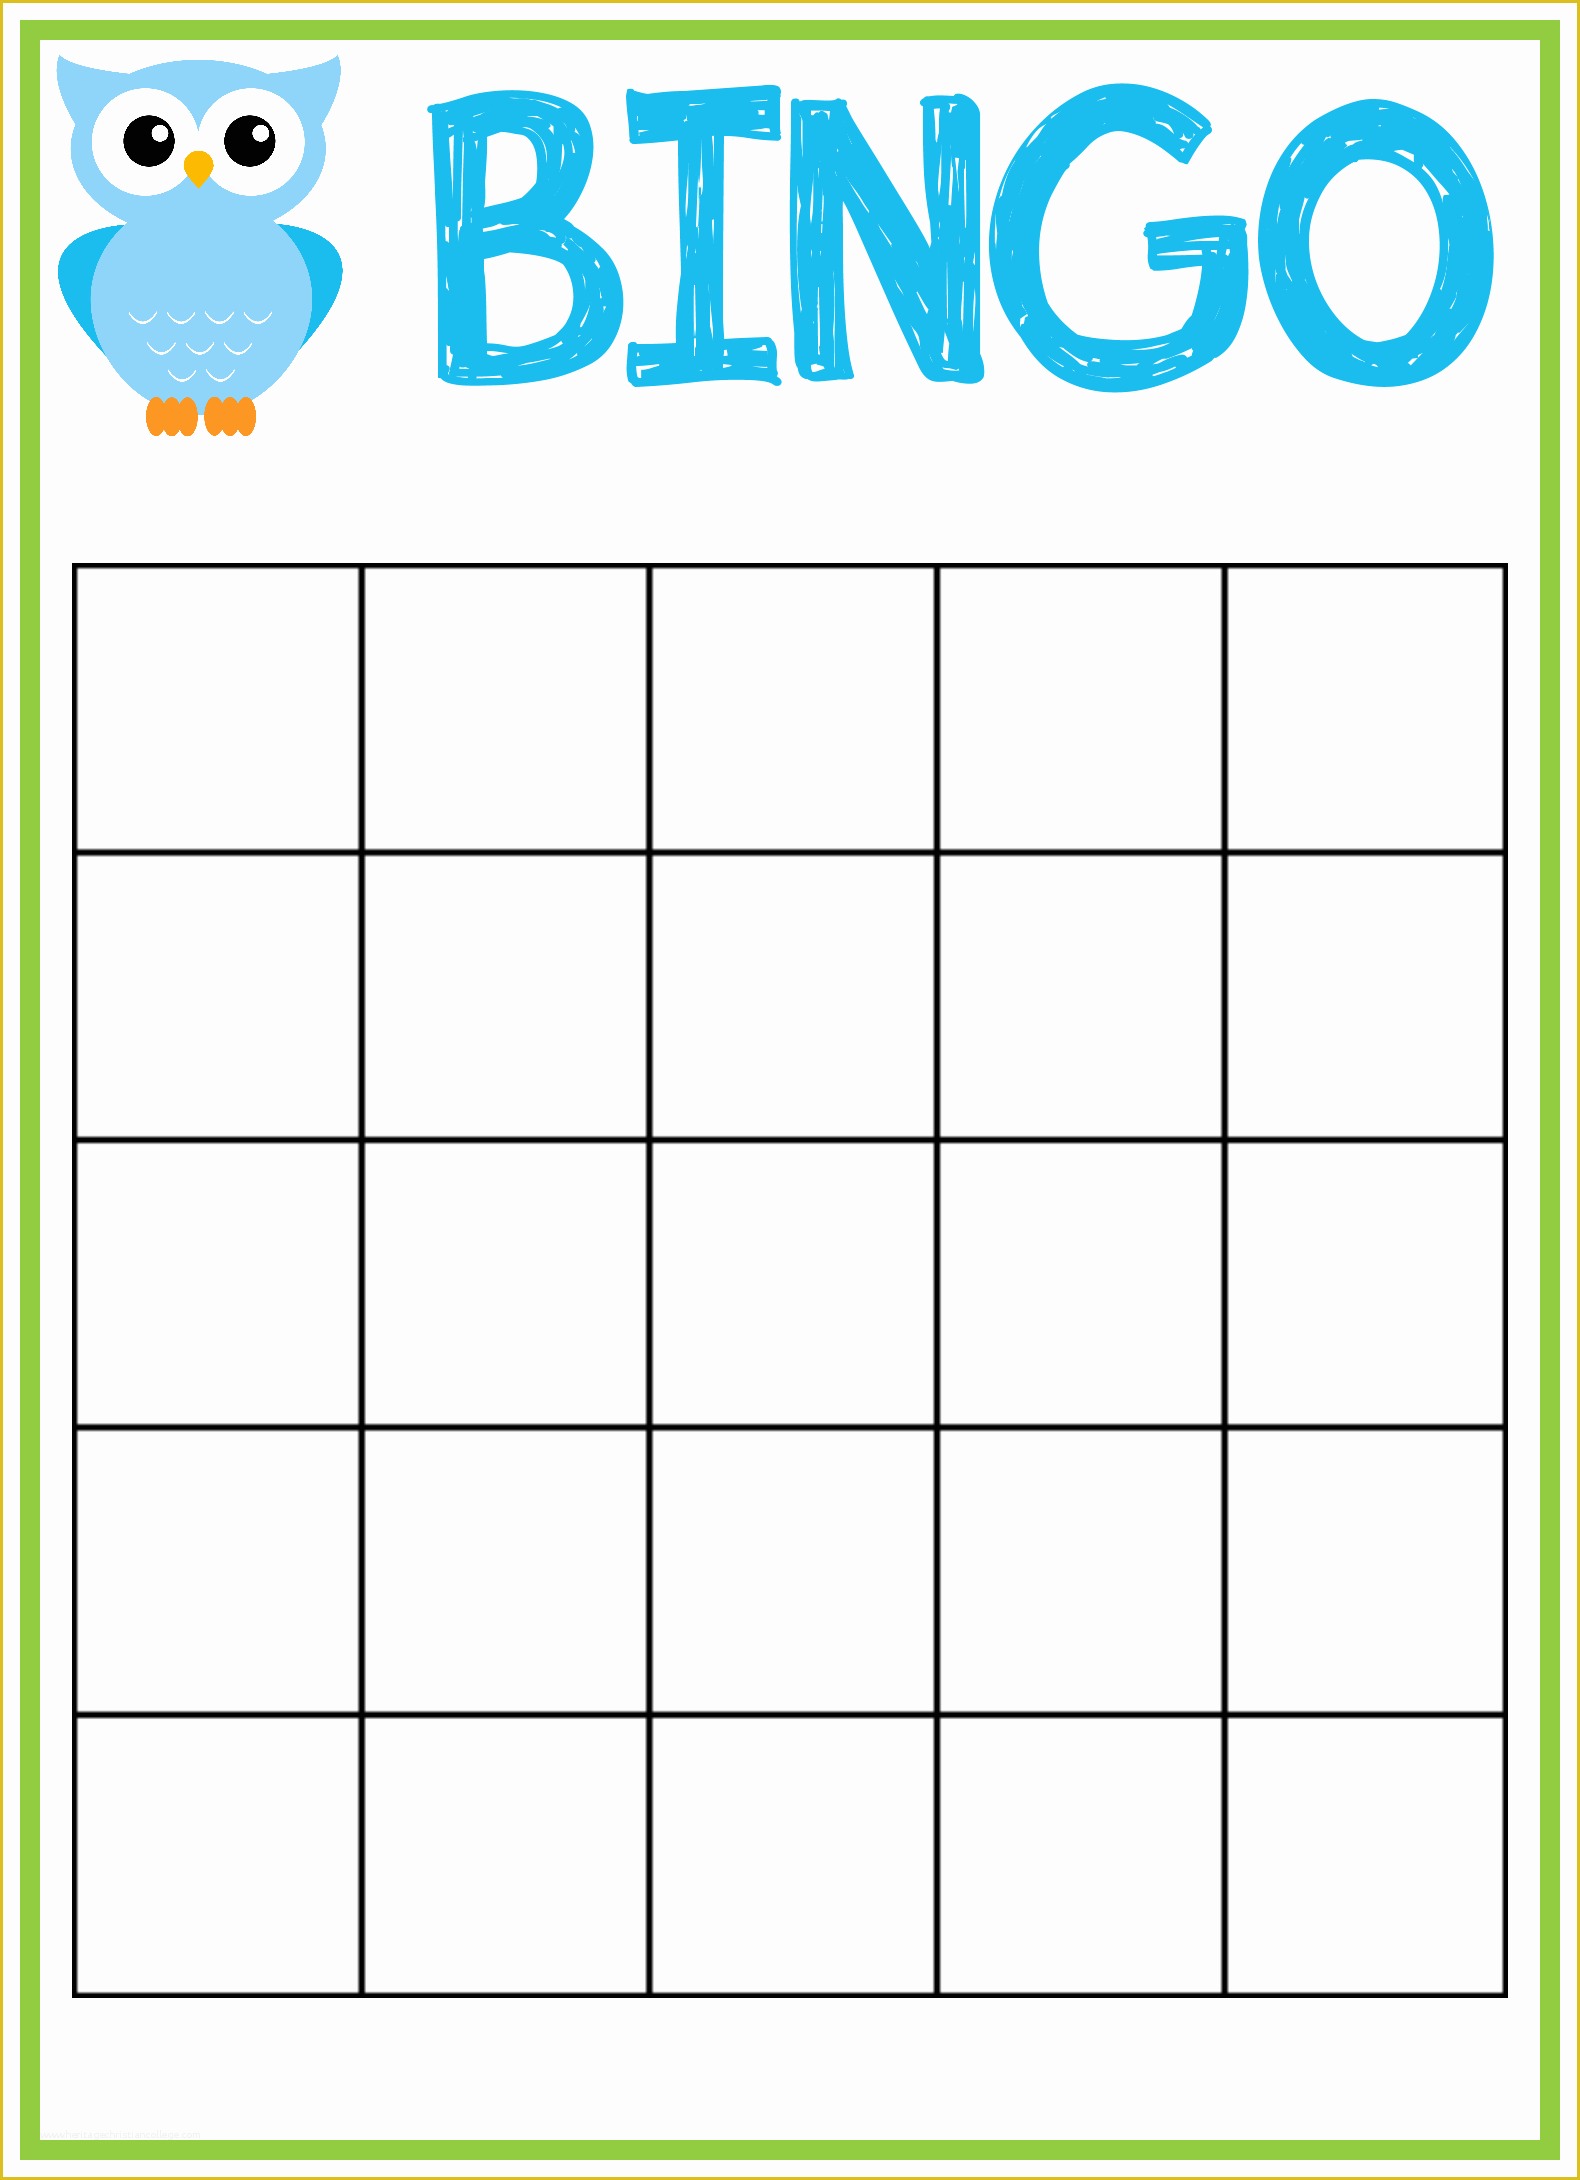 bingo-card-template-free-printable-bingocardprintout-printable-bingo